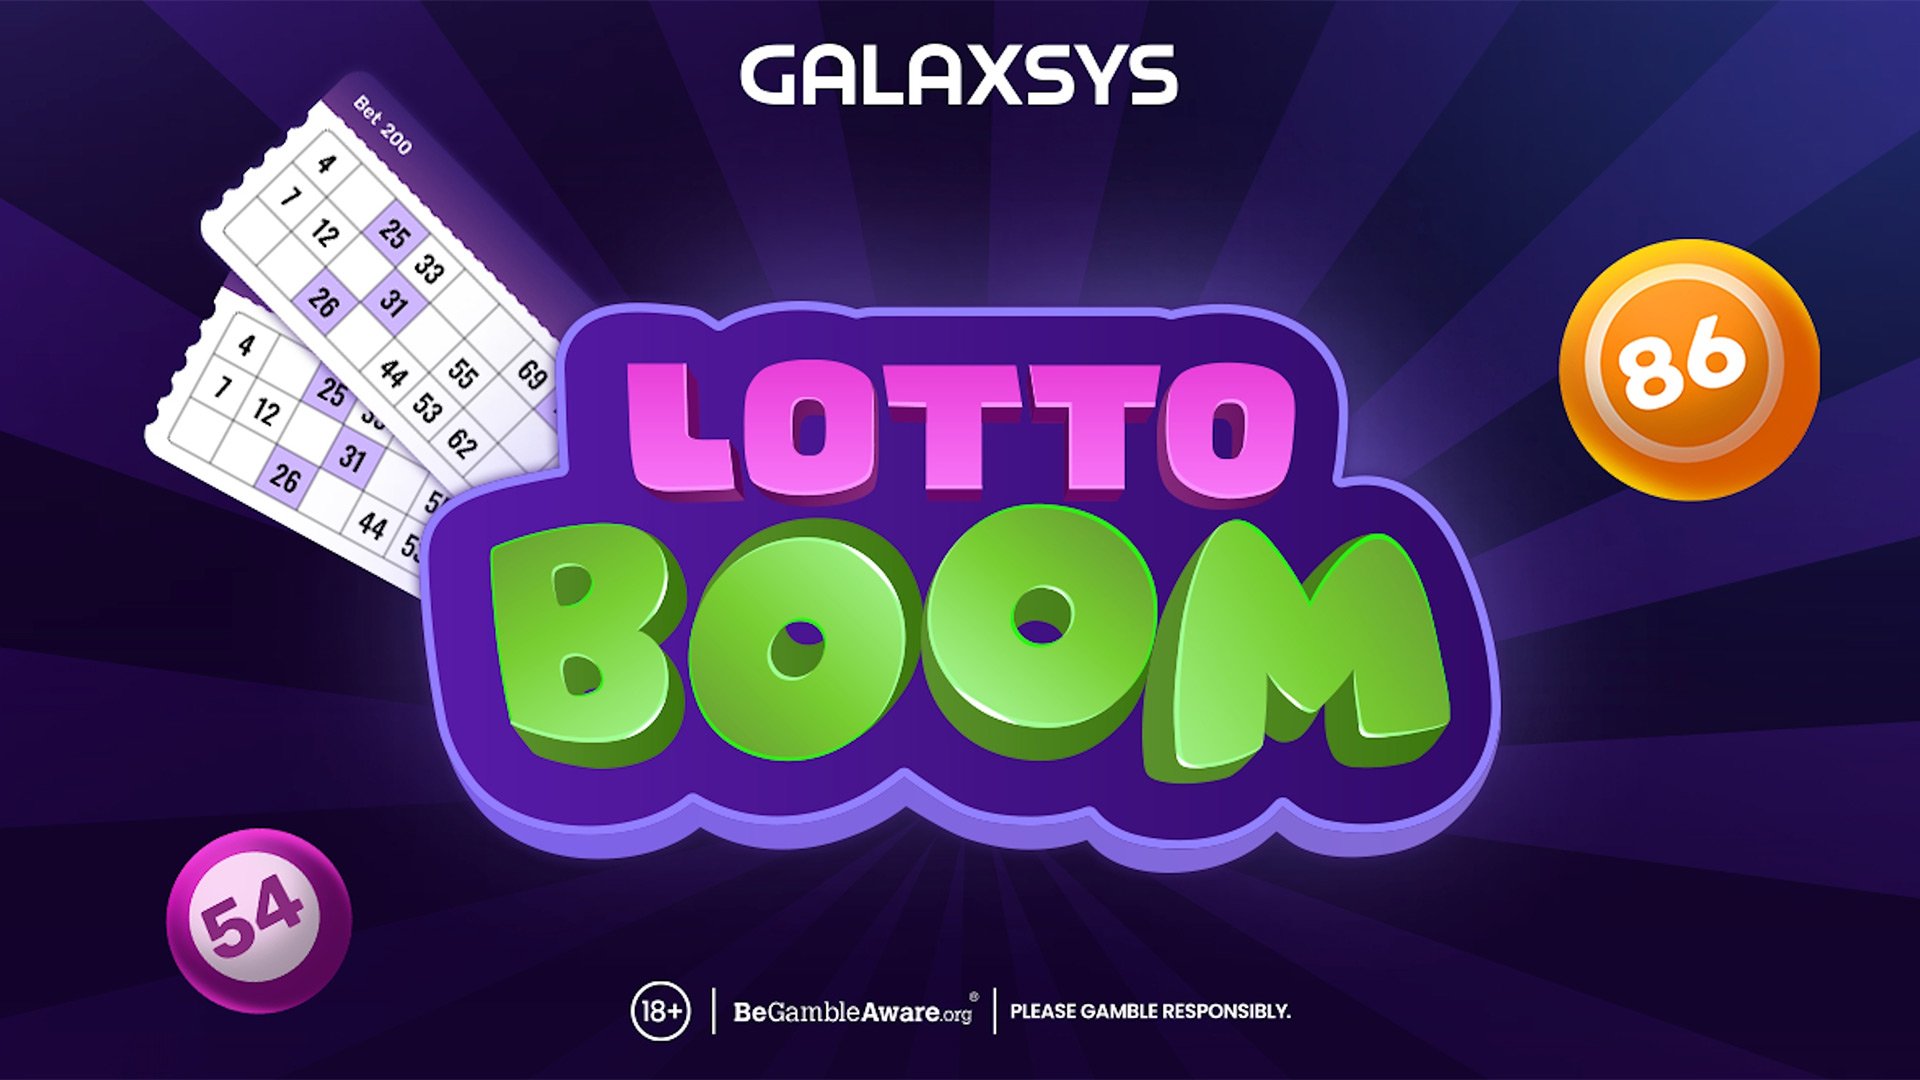 Galaxsys 推出了 Lotto Boom，一款具有新功能和奖金的经典彩票游戏